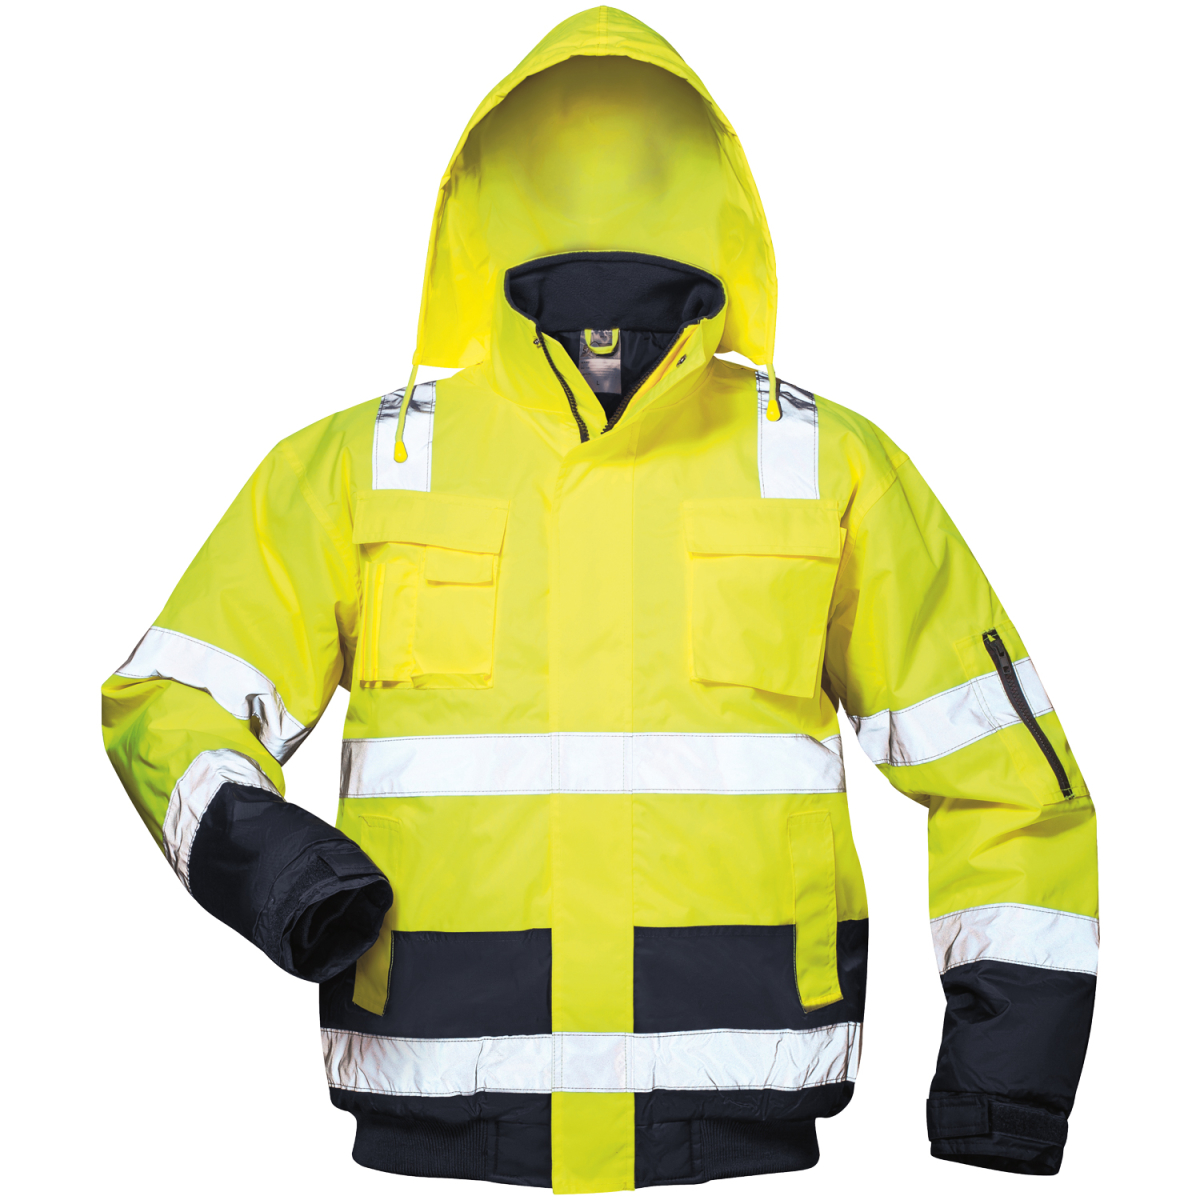 AXEL - € Safestyle®, Pilotjacke gelb/marine 37,90 Warnschutz